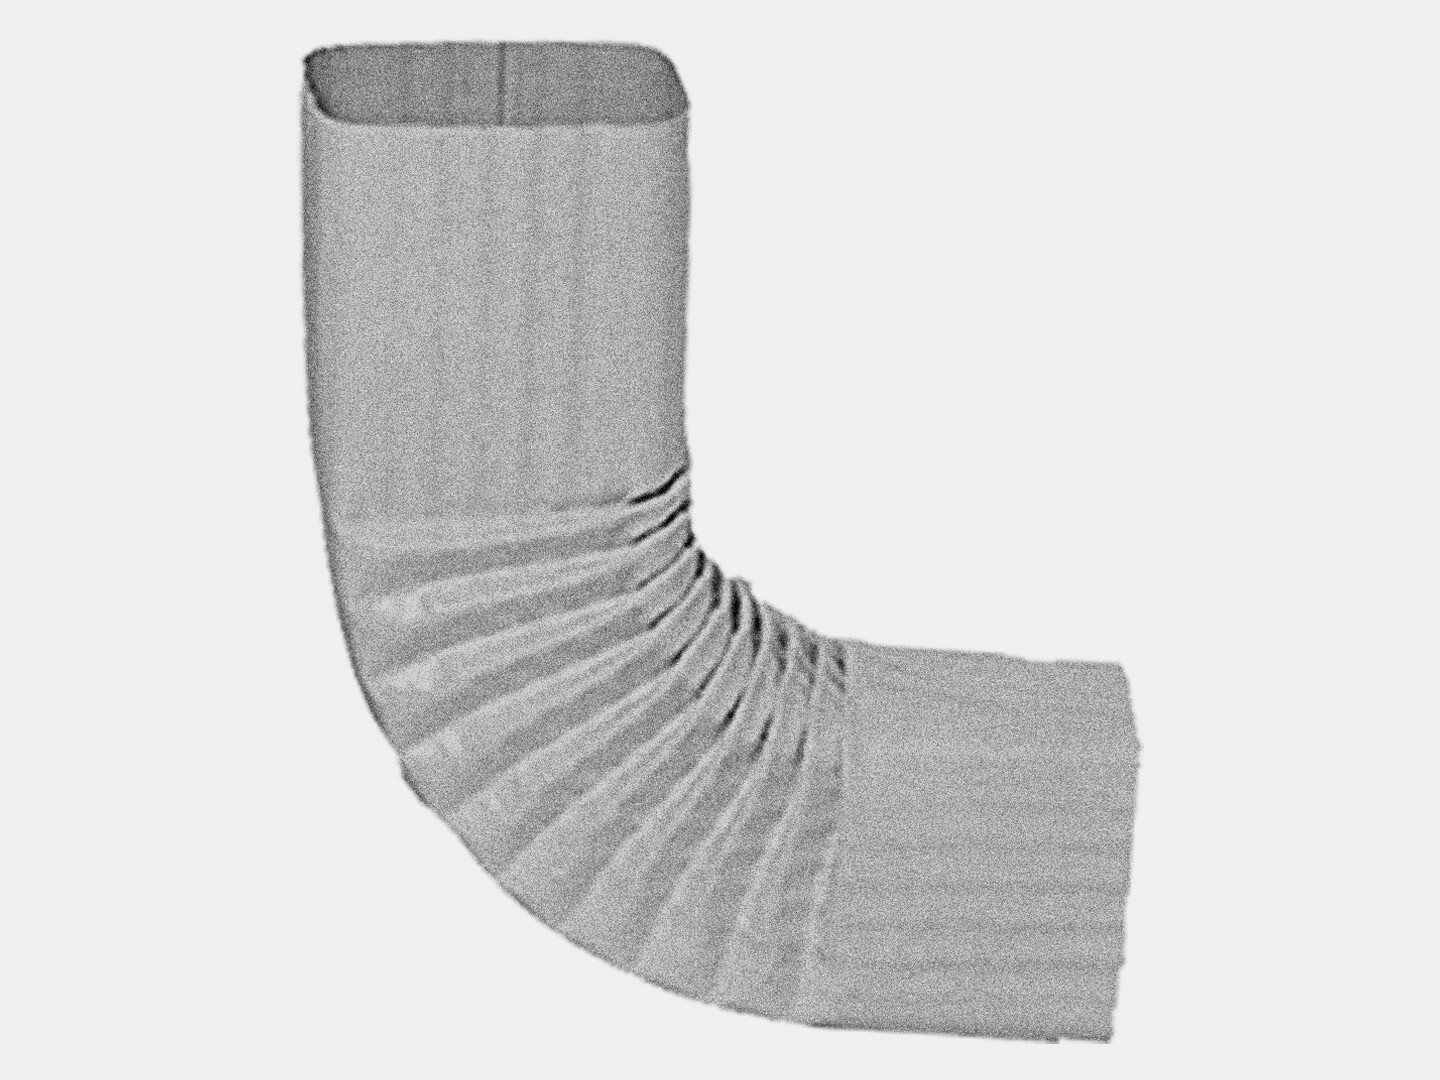 Square Corrugated Galvalume Elbow (B) Style